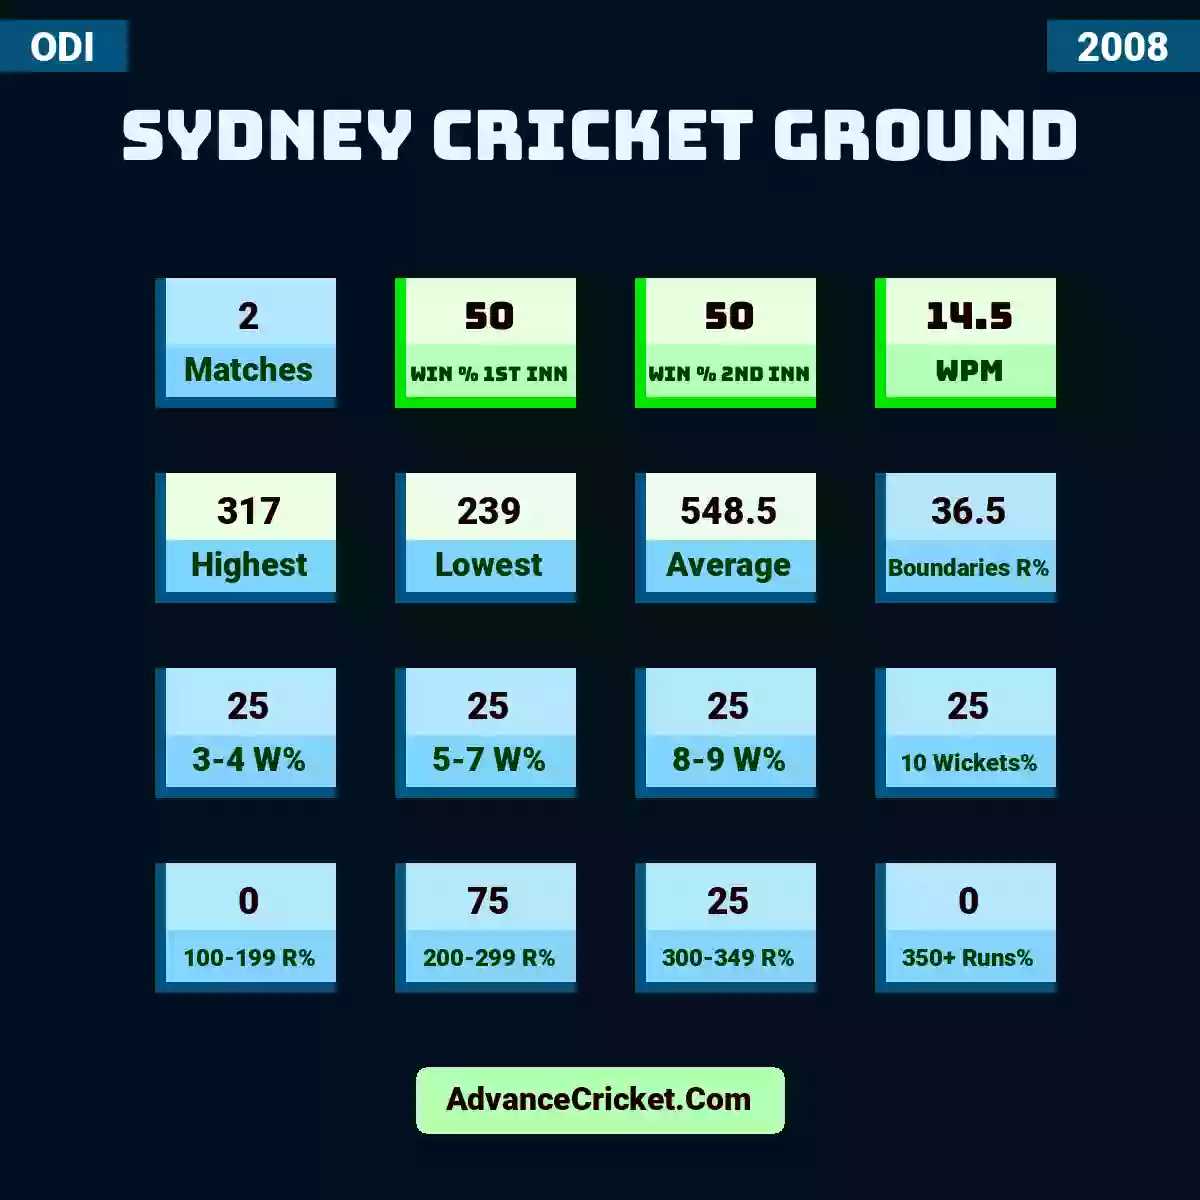 Image showing Sydney Cricket Ground with Matches: 2, Win % 1st Inn: 50, Win % 2nd Inn: 50, WPM: 14.5, Highest: 317, Lowest: 239, Average: 548.5, Boundaries R%: 36.5, 3-4 W%: 25, 5-7 W%: 25, 8-9 W%: 25, 10 Wickets%: 25, 100-199 R%: 0, 200-299 R%: 75, 300-349 R%: 25, 350+ Runs%: 0.